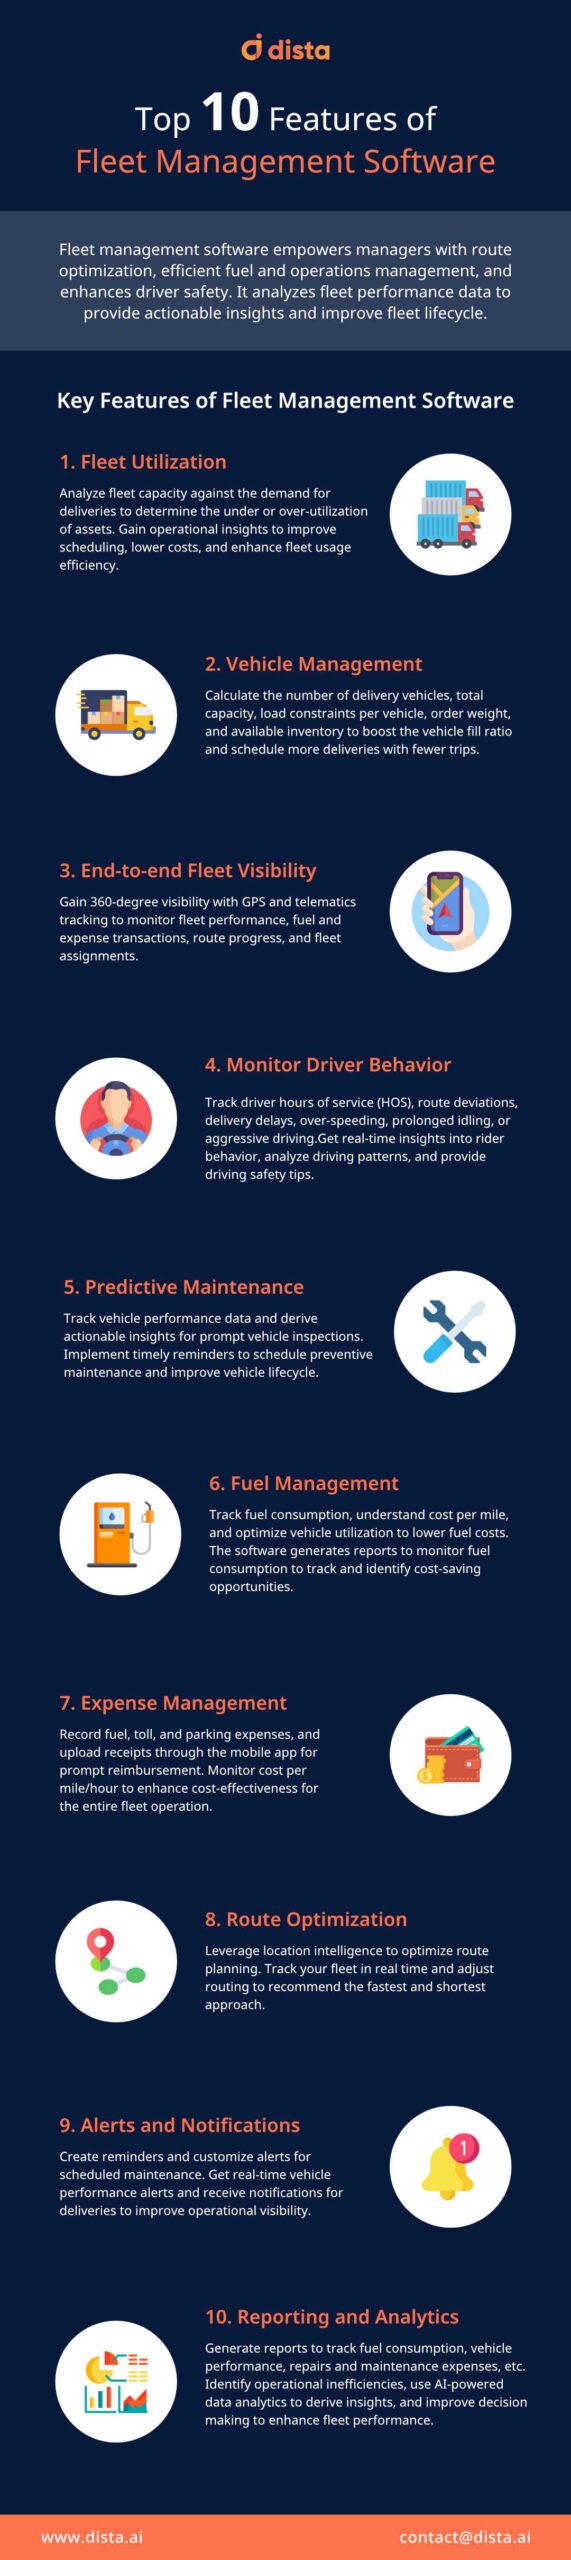 Top 10 Features of Fleet Management Software